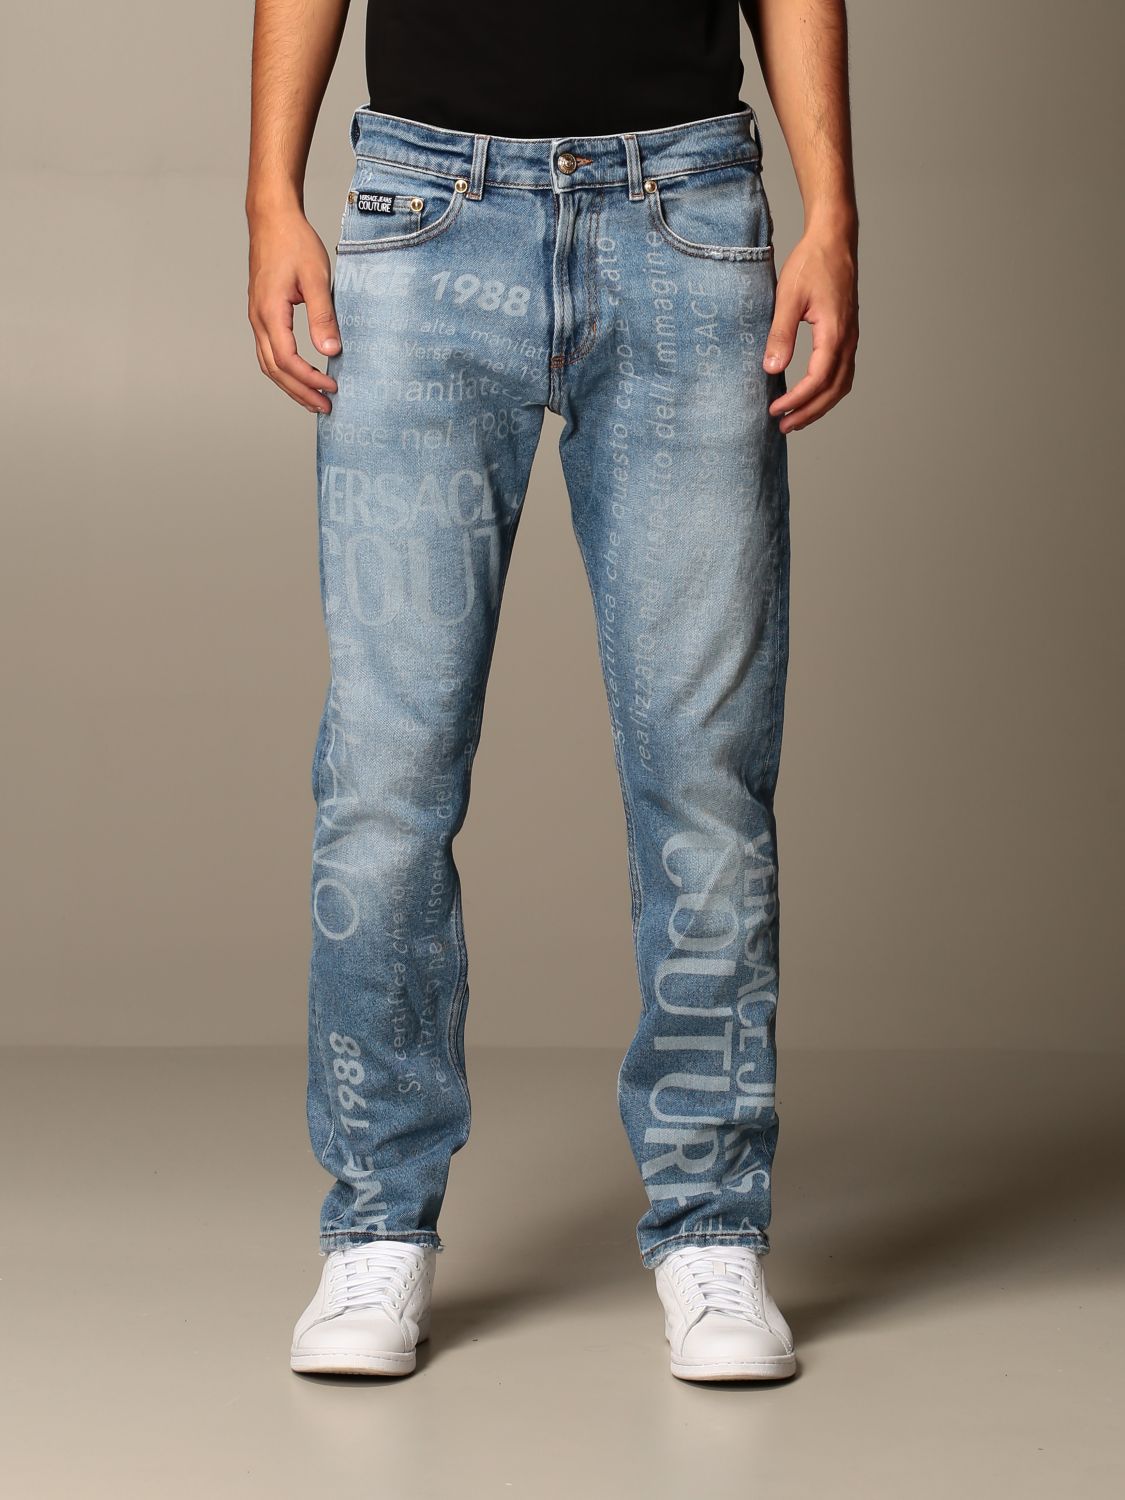 versace men's jeans couture